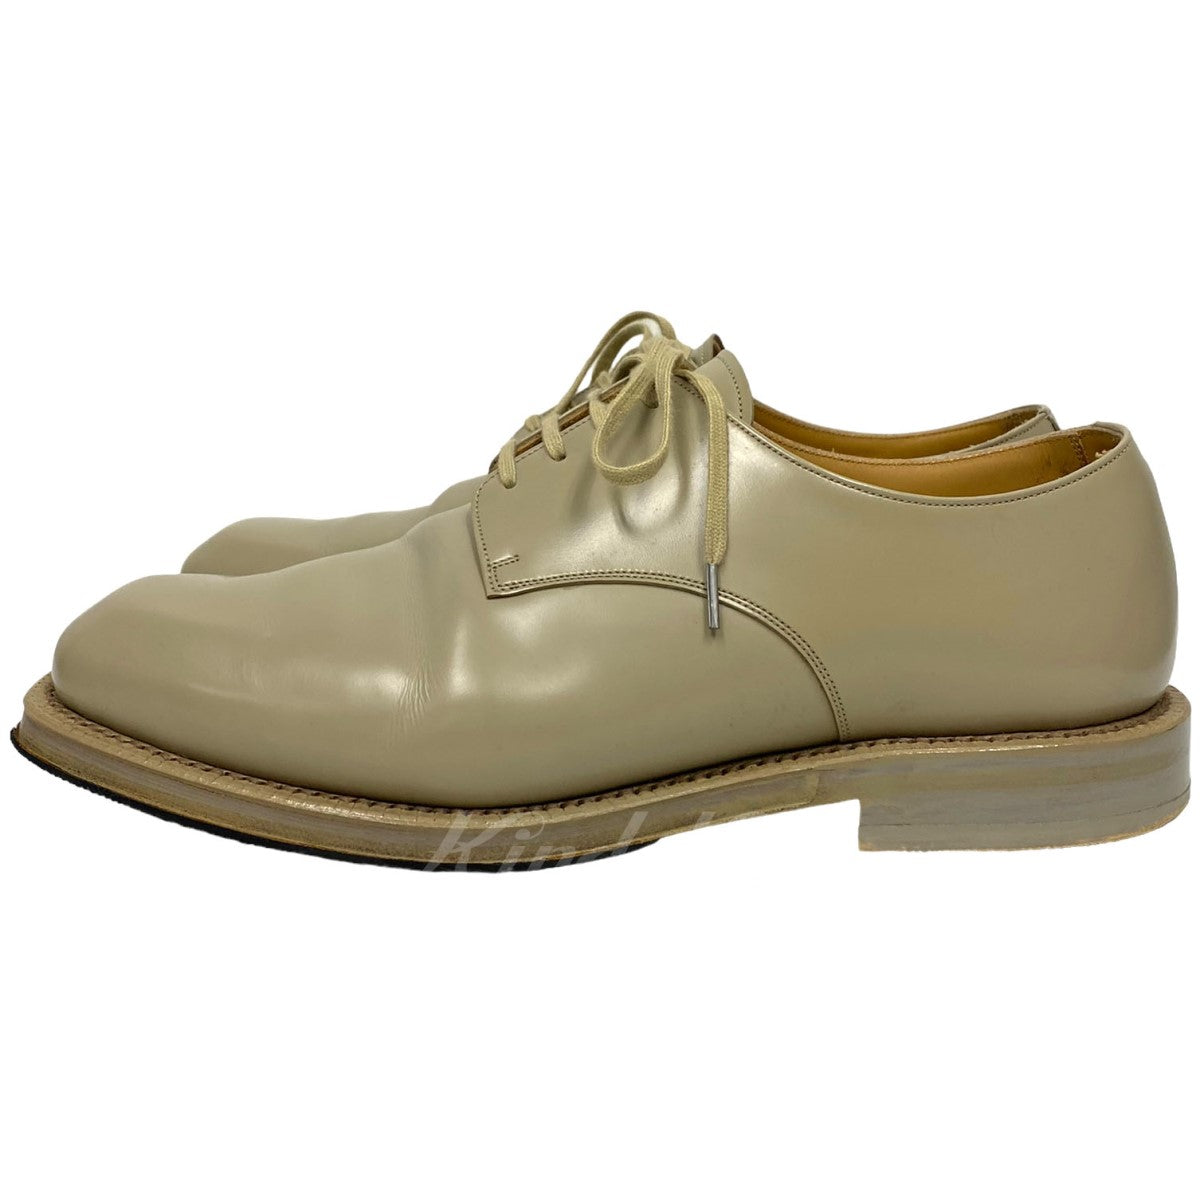 AURALEE×foot the coacher Leather Shoes Calf Skinレザーシューズ靴 